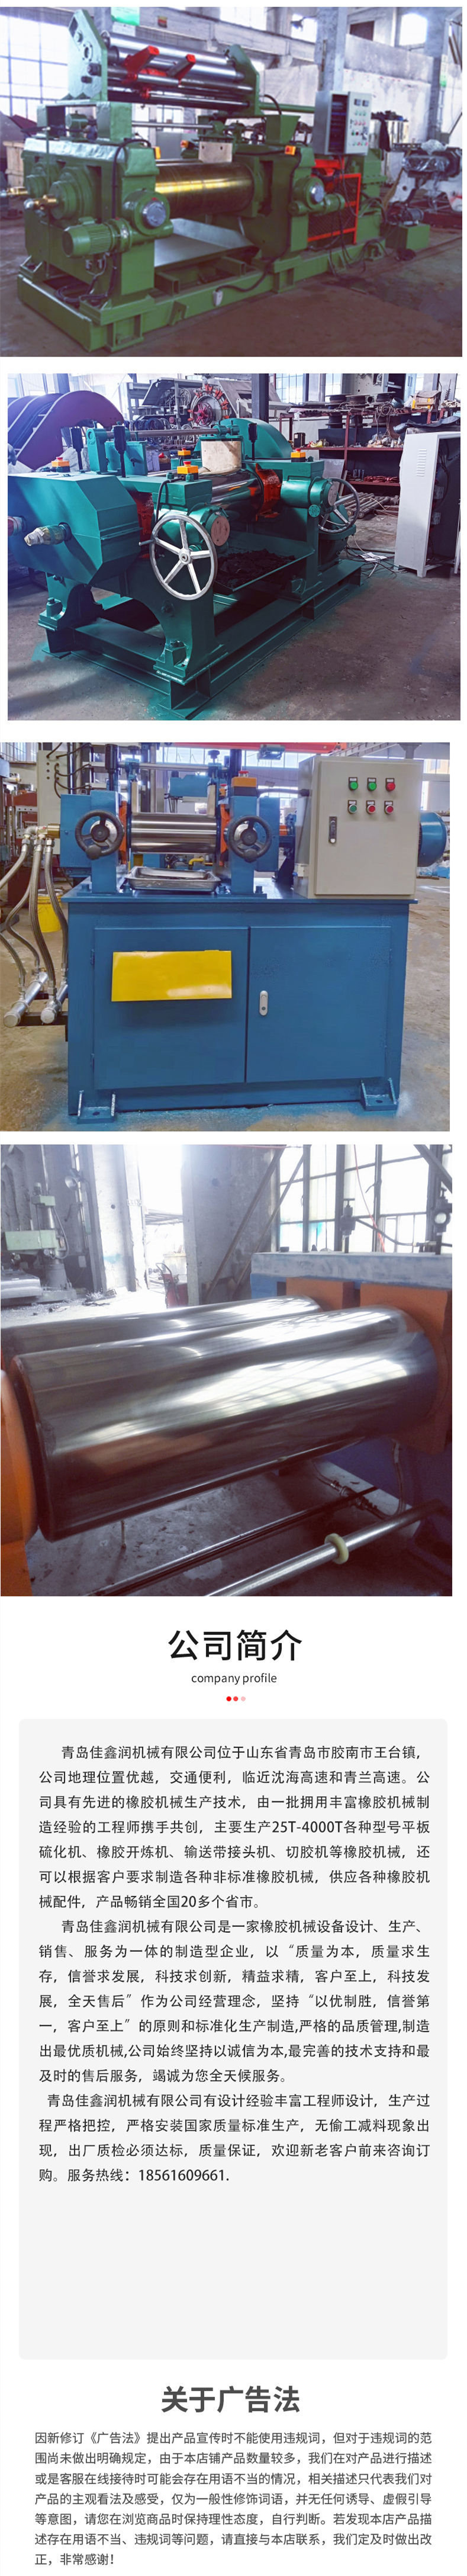 Jiaxin Run 16 inch Open Rubber Refining Machine - Nylon Tile Dry Oil Lubrication Open Refining Machine - Double Roll Large Gear Type